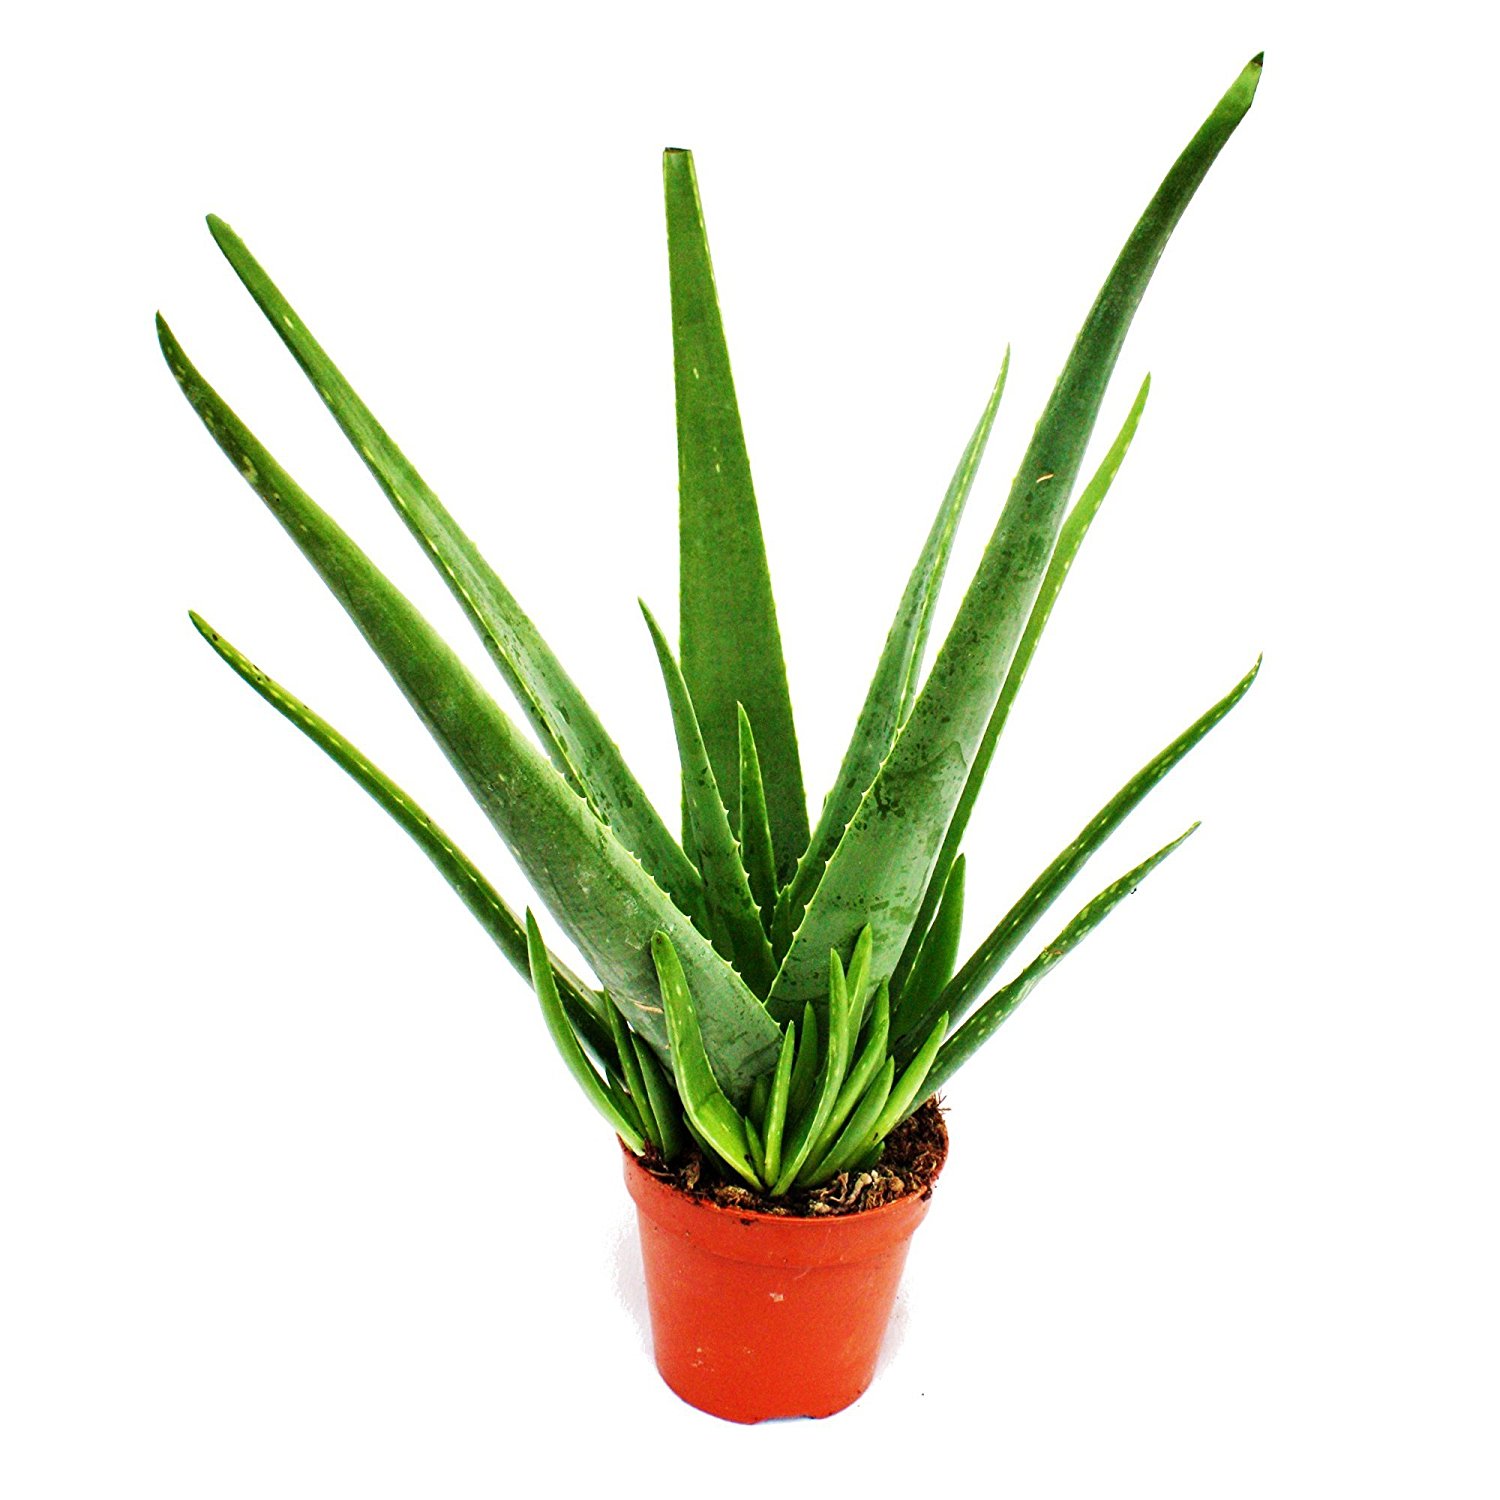 Aloe vera - approx. 4-5 years old - 15cm pot: Amazon.co.uk: Garden ...